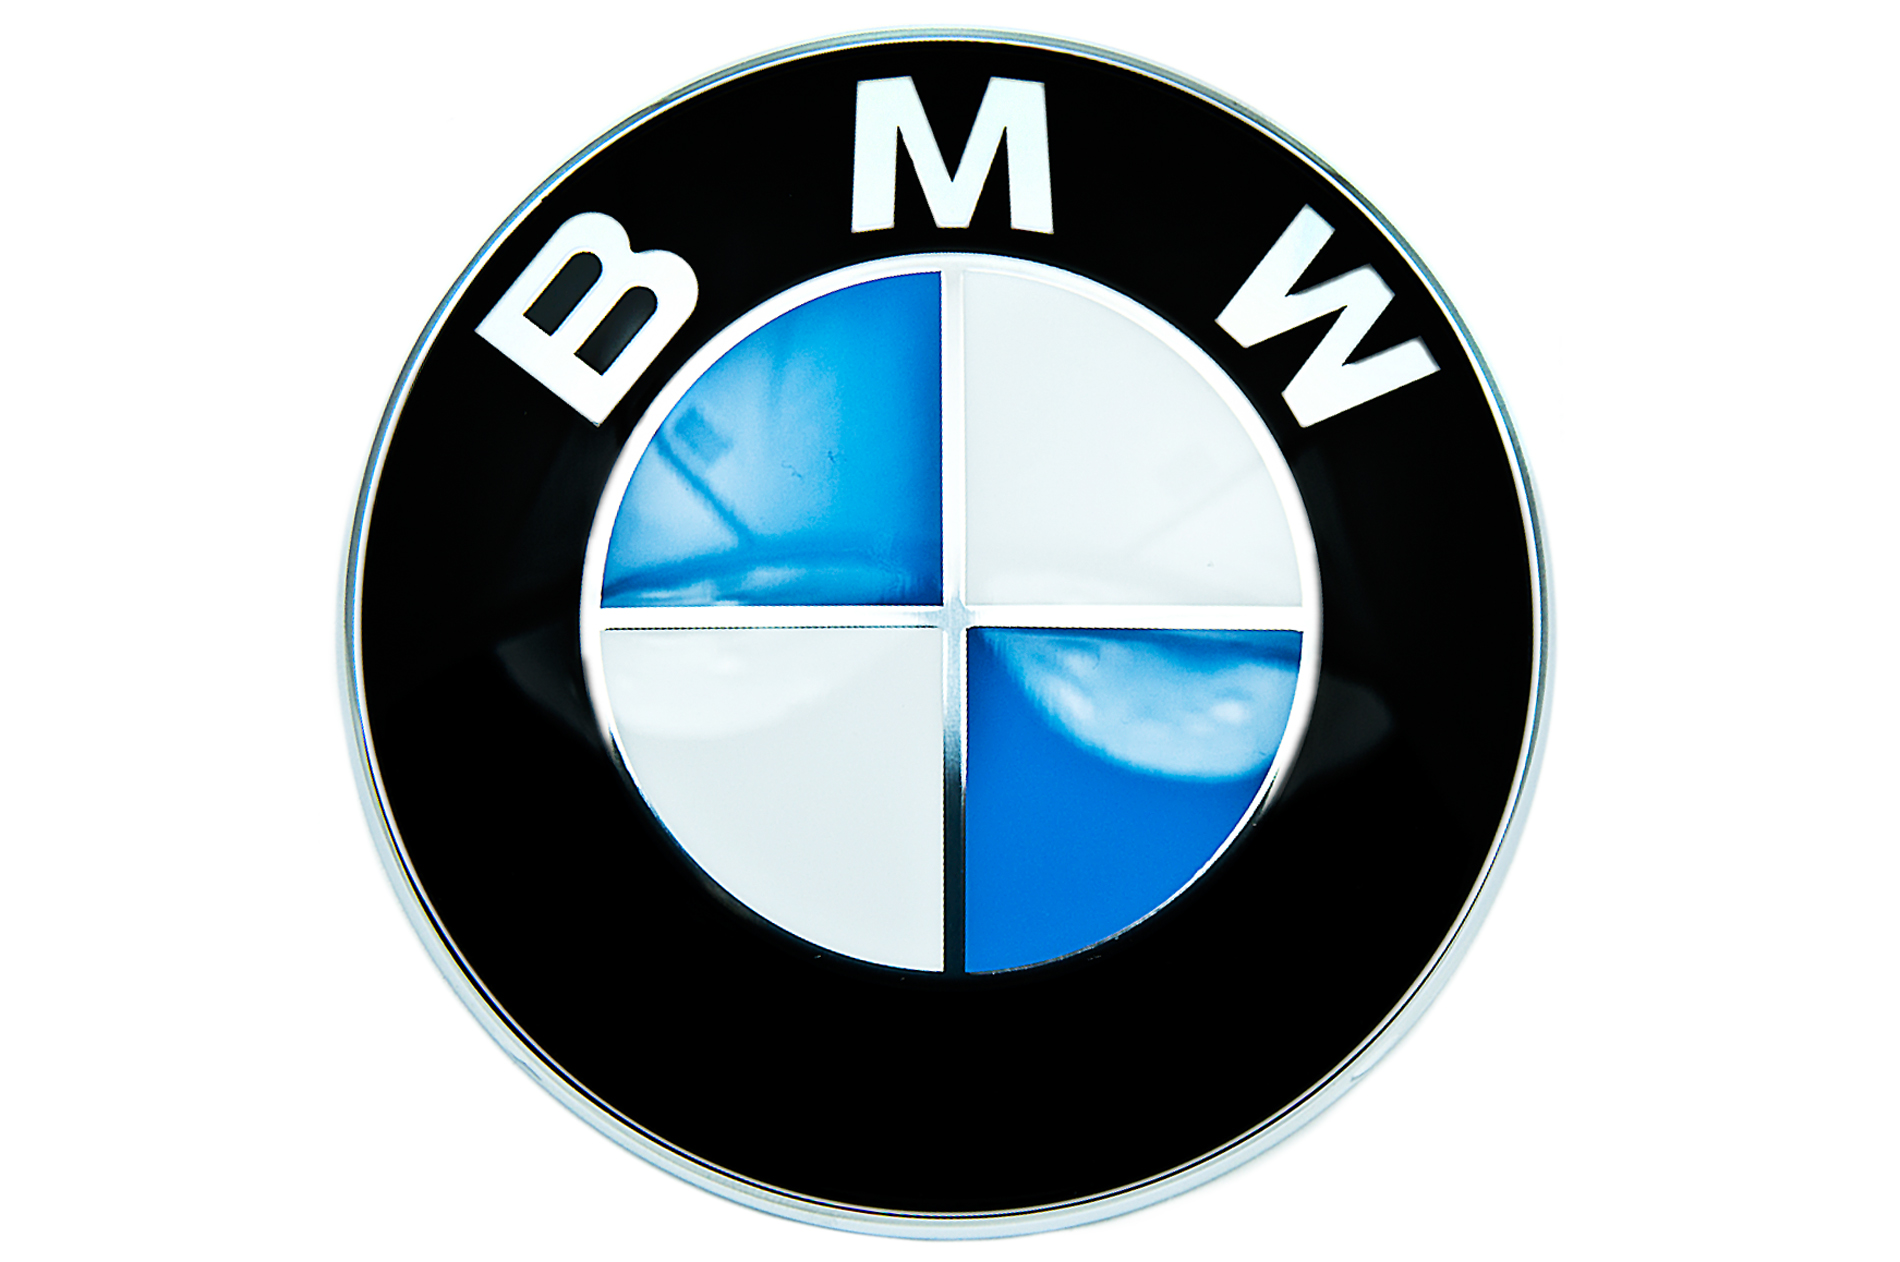 BMW m6 rental in dubai 